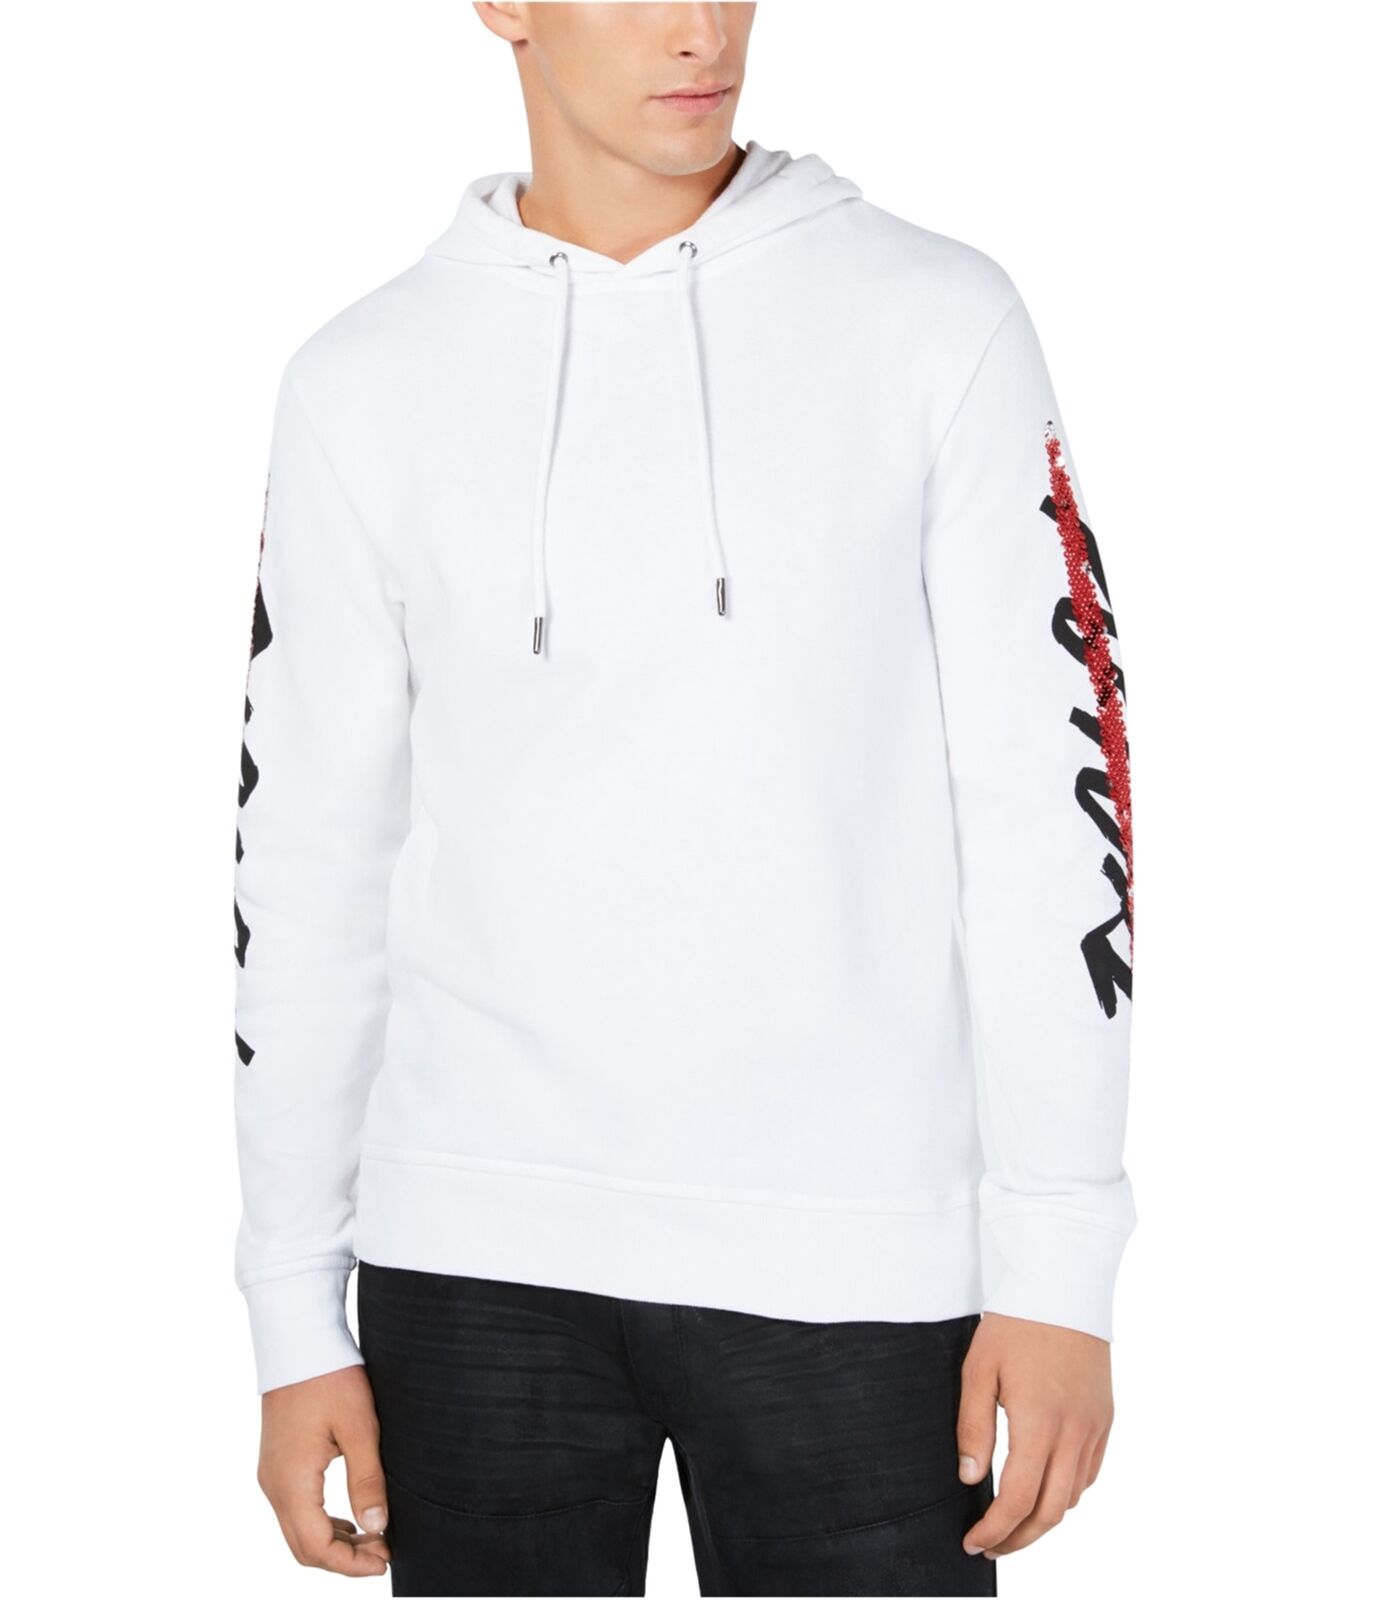 I-n-c Mens Sequin Graphic Hoodie Sweatshirt, White, Large